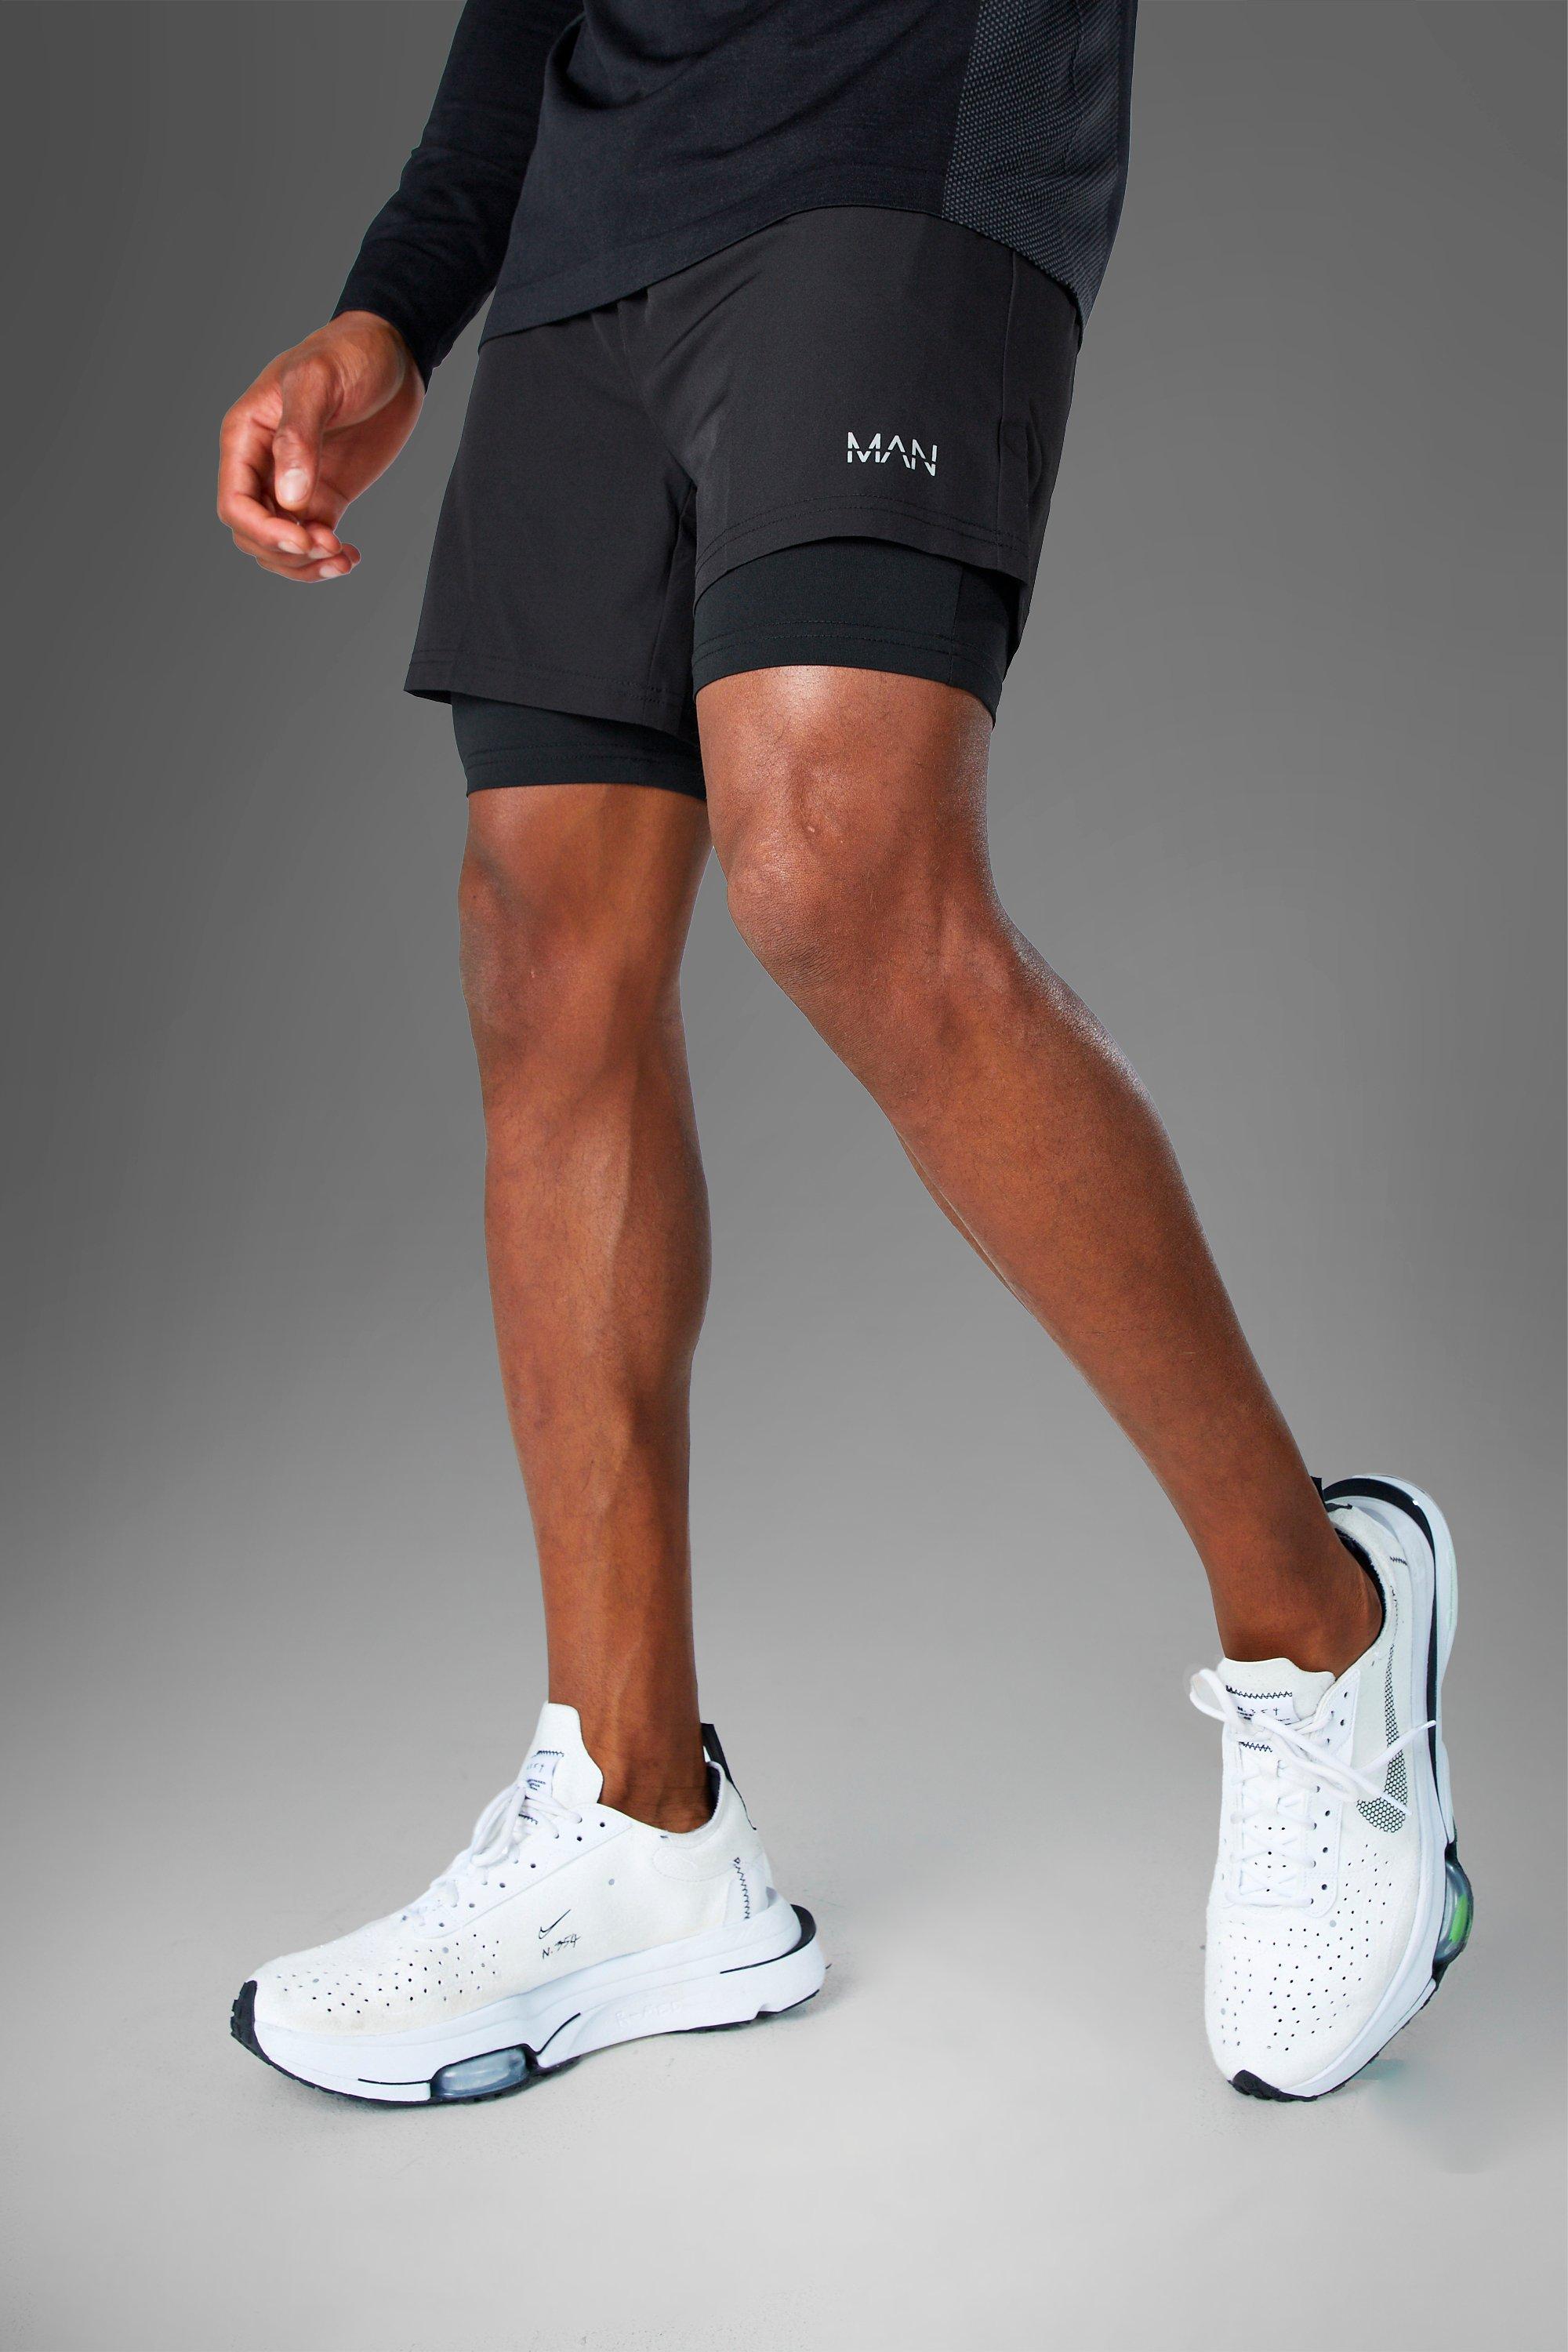 https://media.boohoo.com/i/boohoo/mzz15632_black_xl/male-black-man-active-gym-2-in-1-shorts